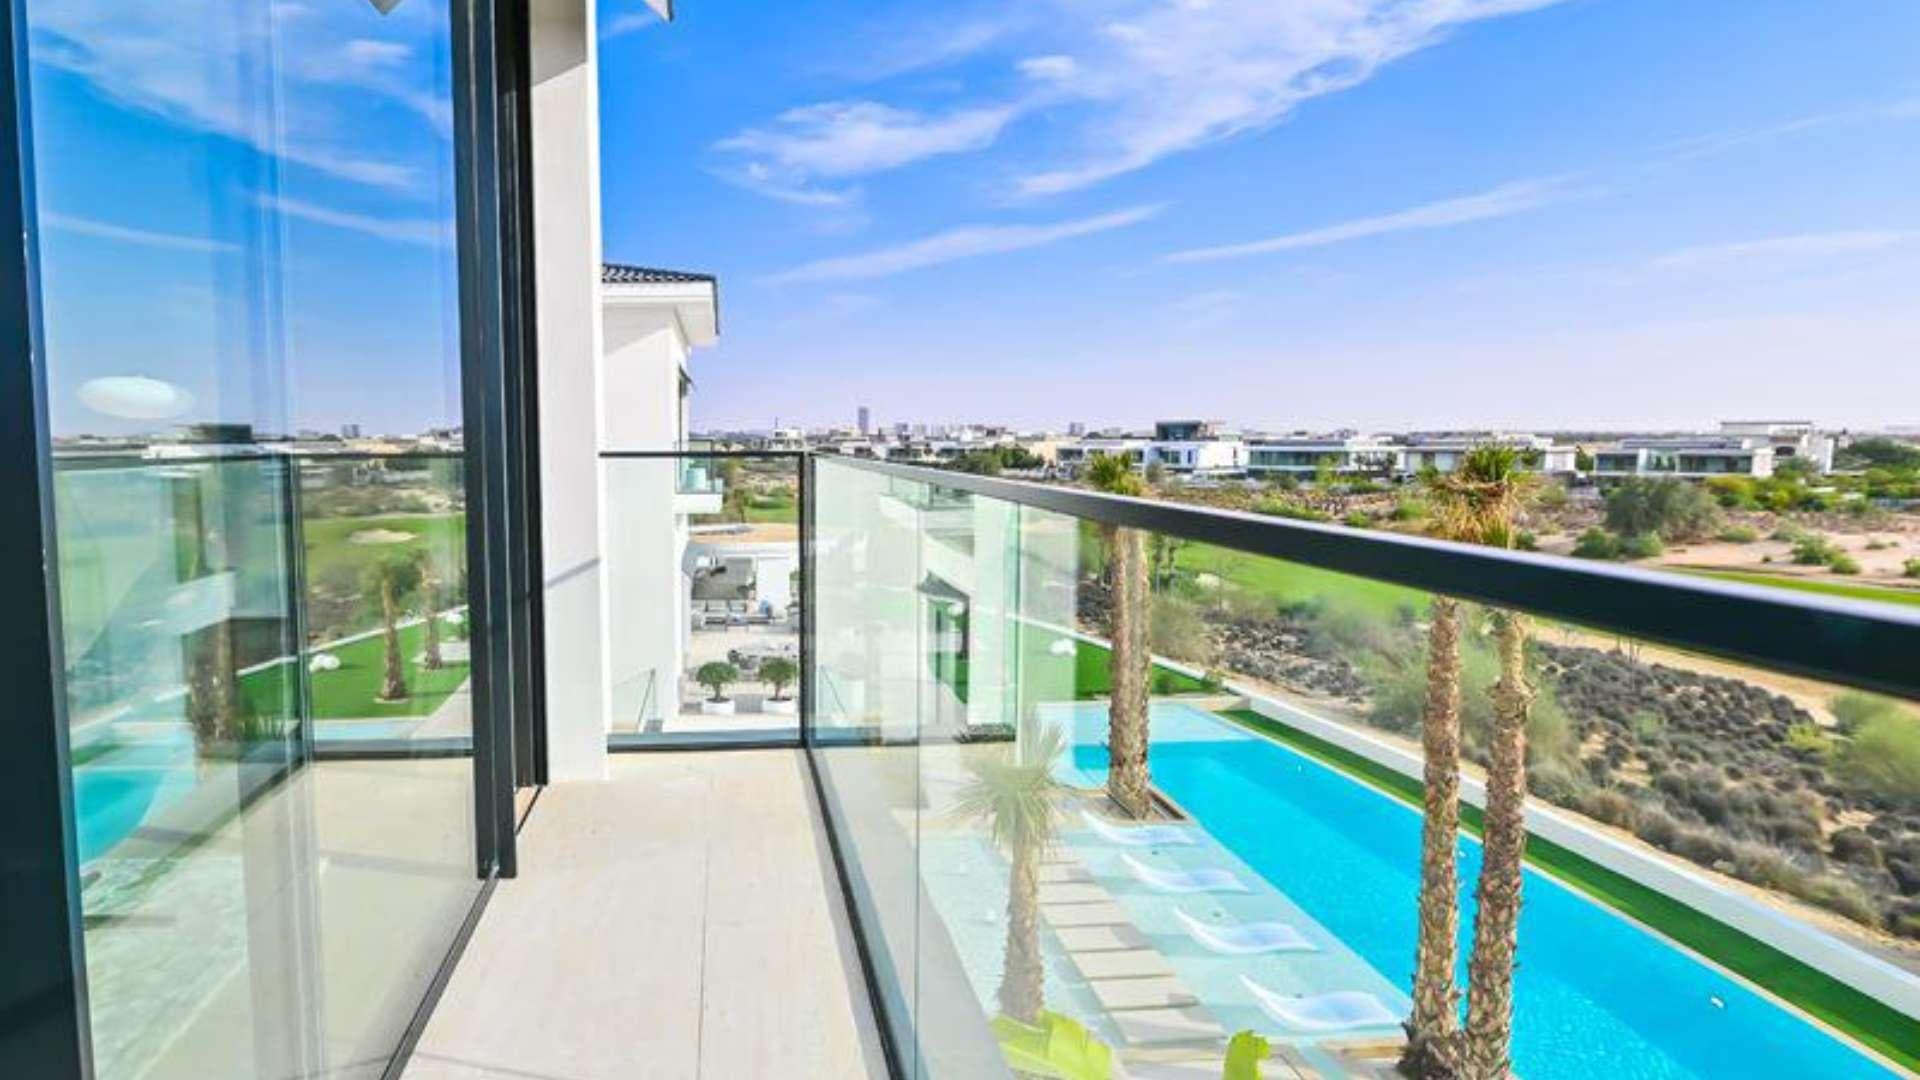 7 Bedroom Villa For Sale Dubai Hills Lp20693 861989c8183bc80.jpg